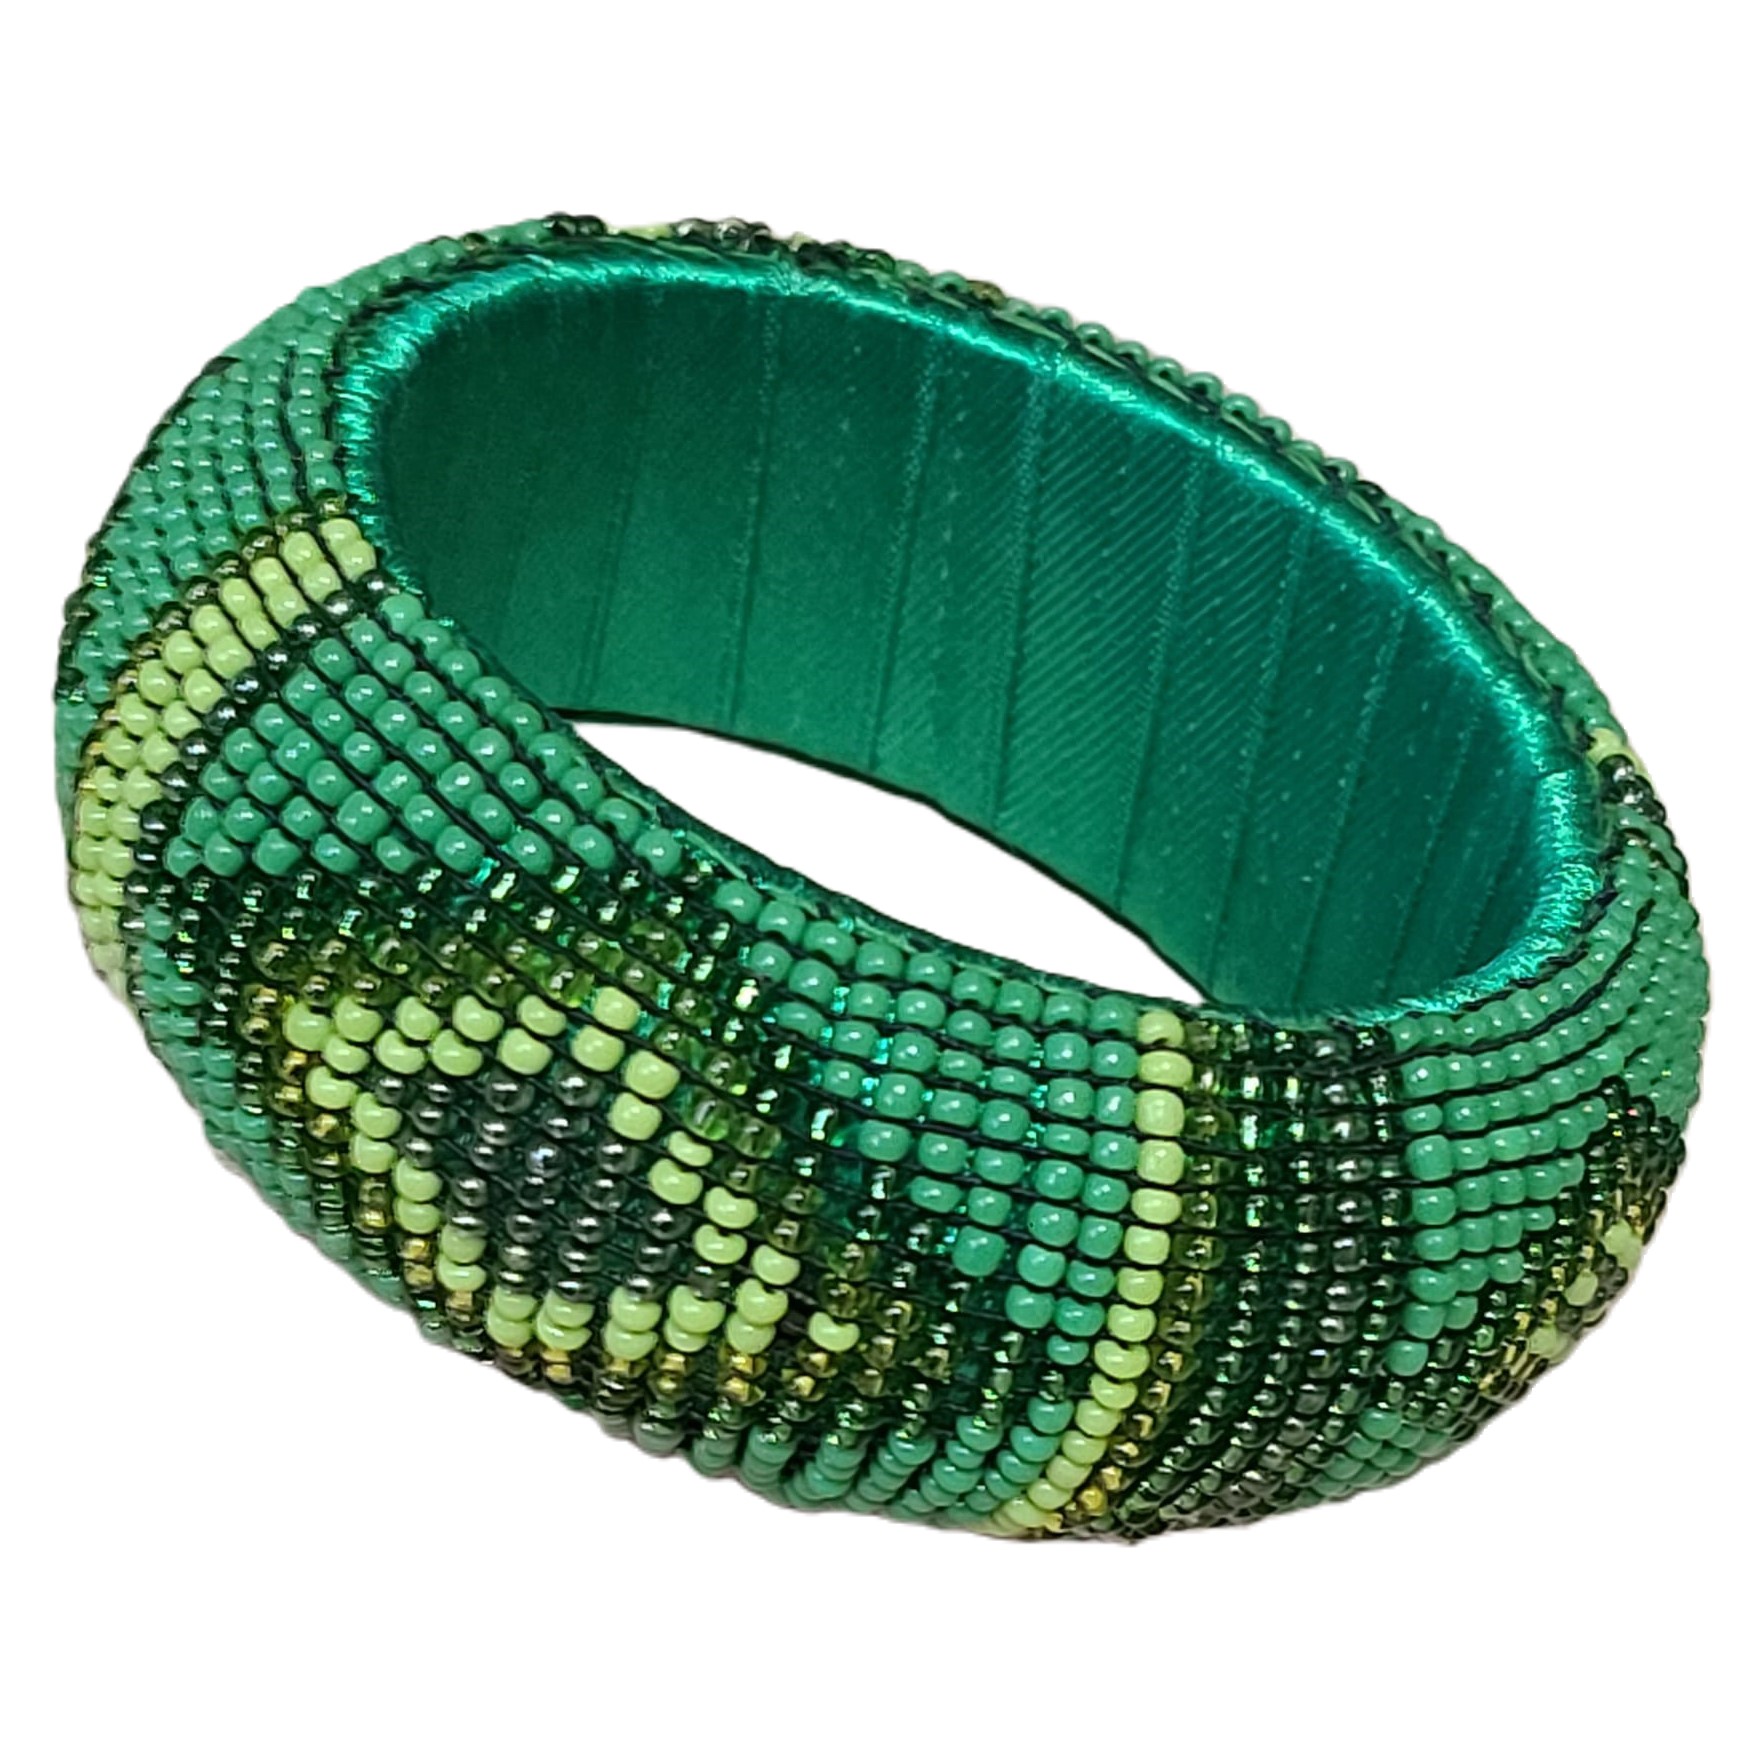 Green seed bead bangle bracelet - Click Image to Close